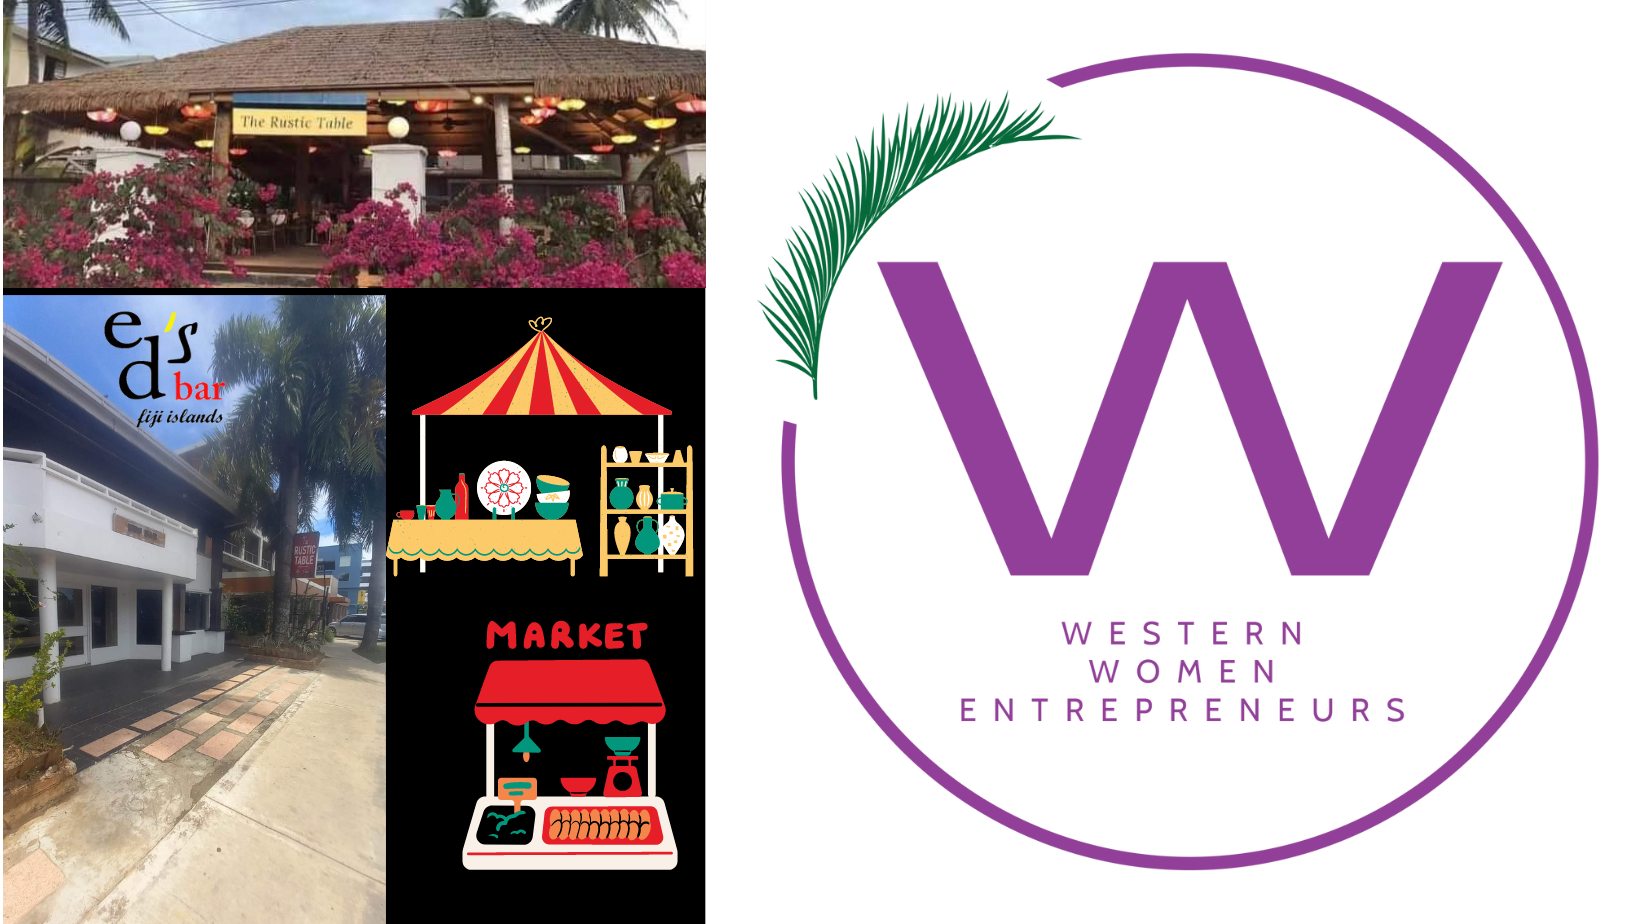 Western Women Entrepreneurs Market